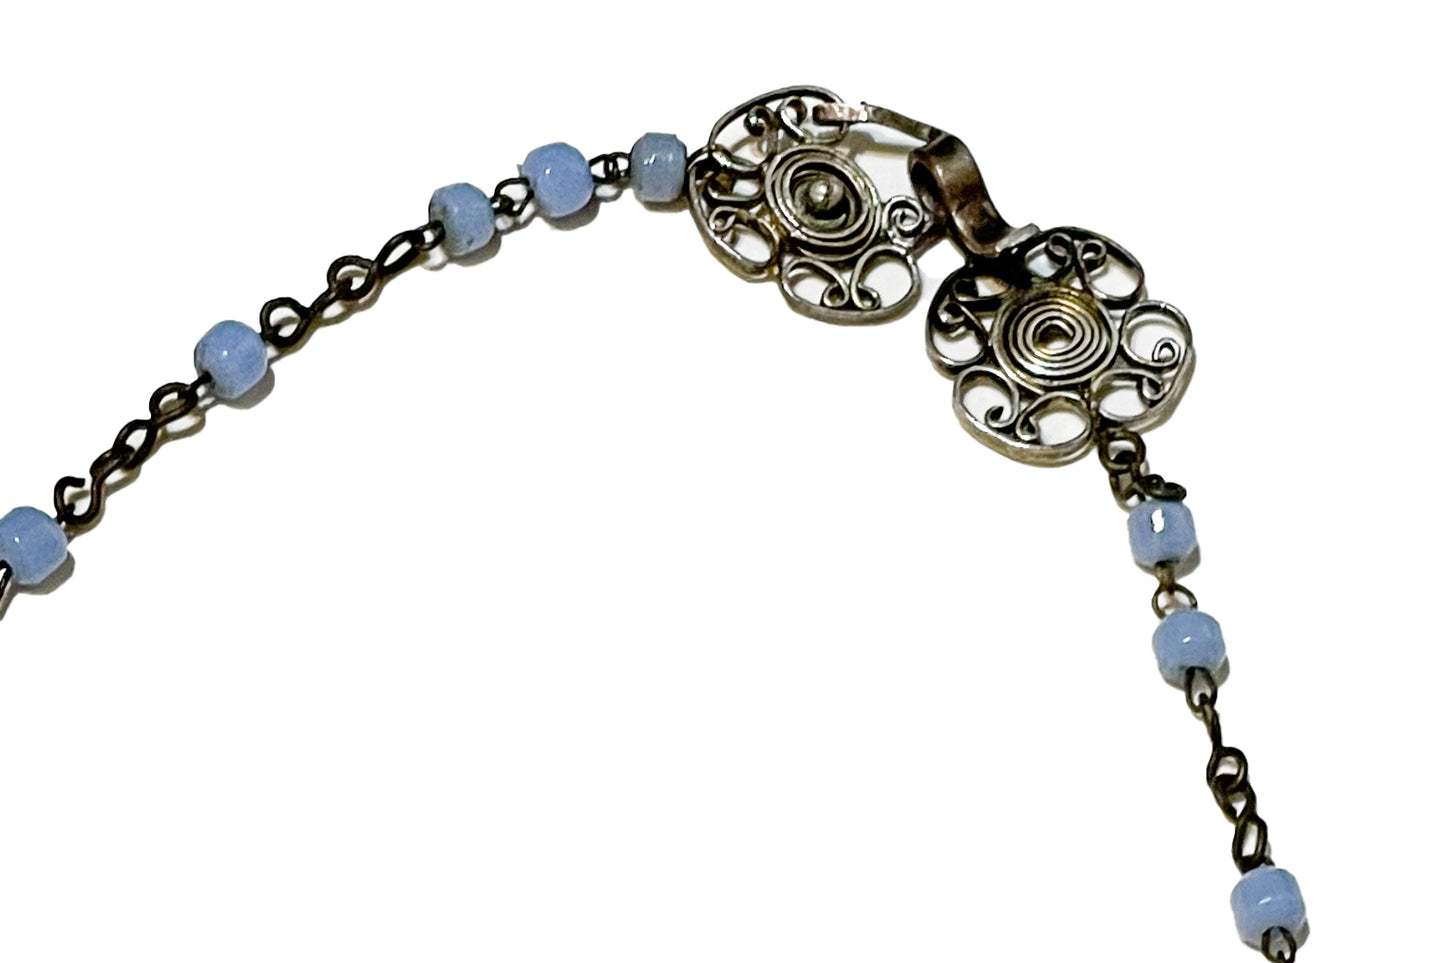 Necklace with cameo depicting Vesuvius.